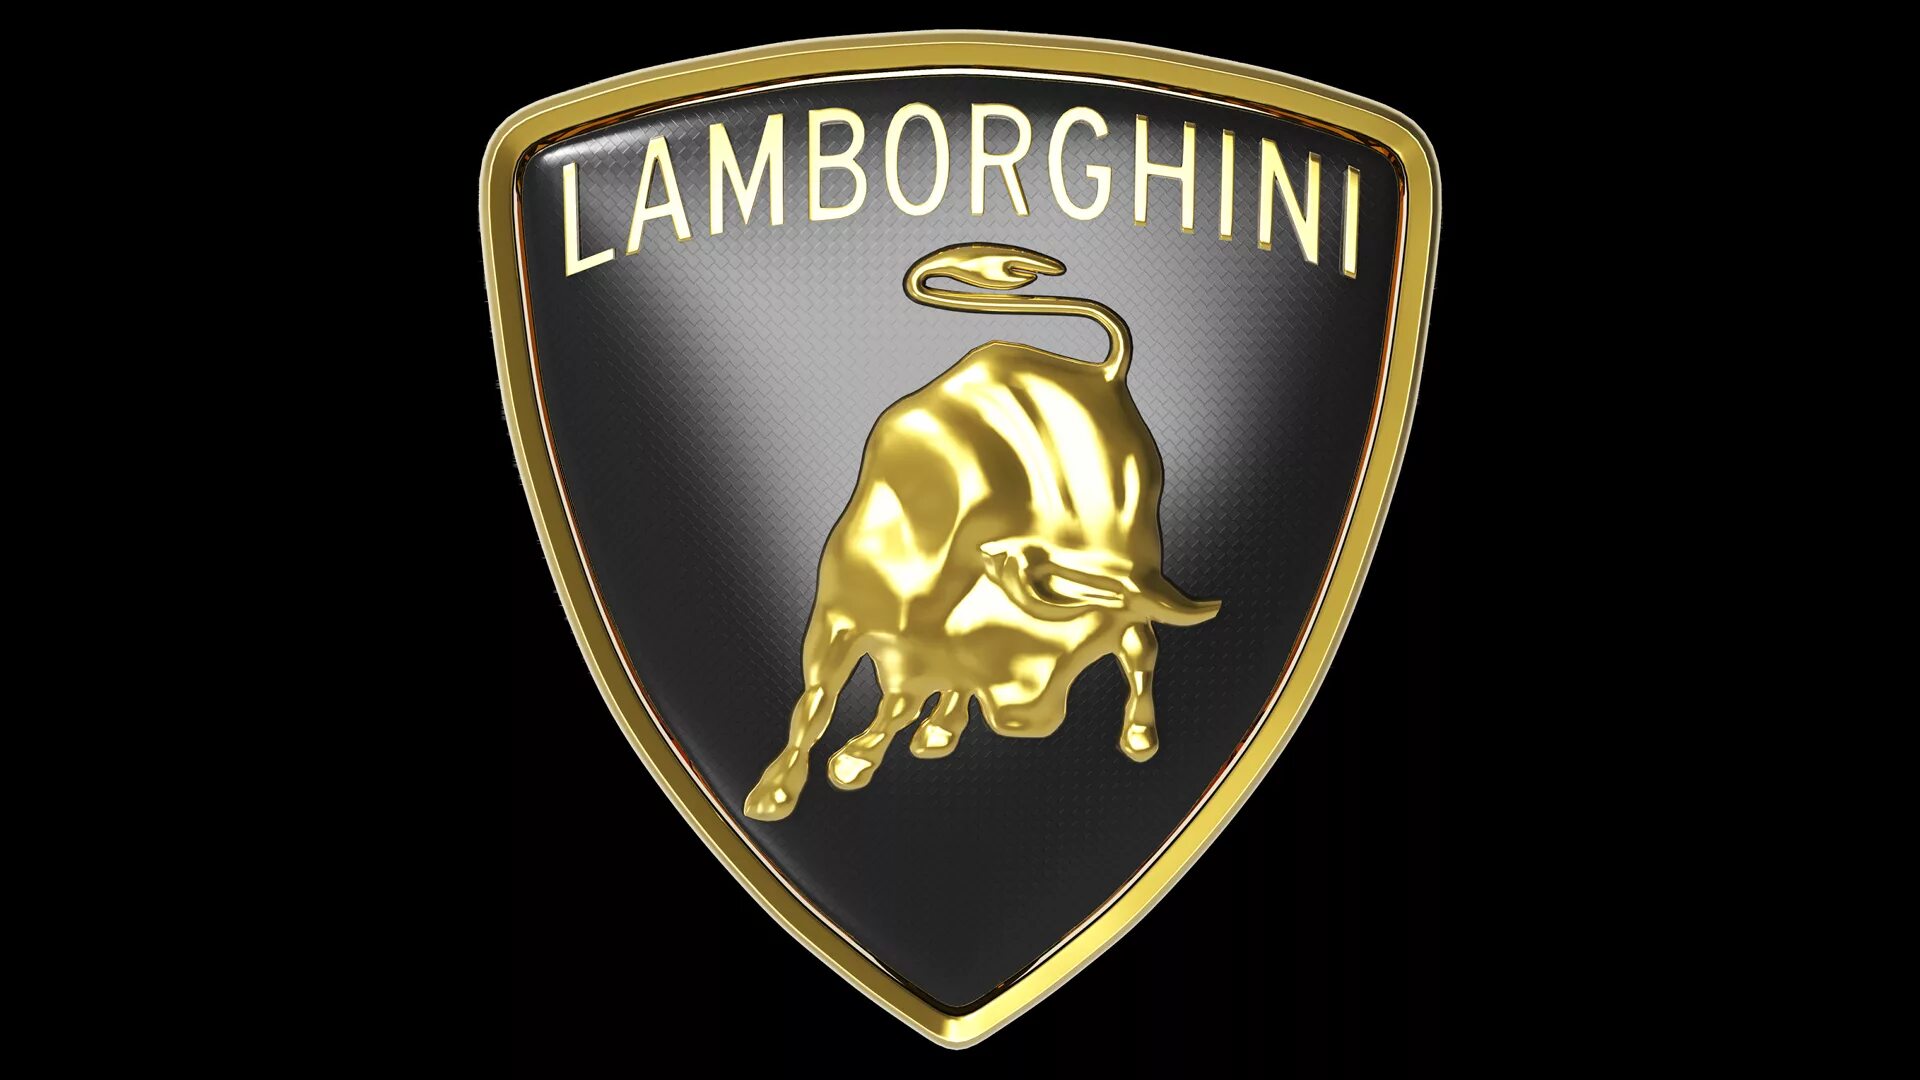 Значок Ламборгини. Ламборджини шильдик. Логотип компании Lamborghini. Знак компании Ламборджини. Новый значок ламборгини